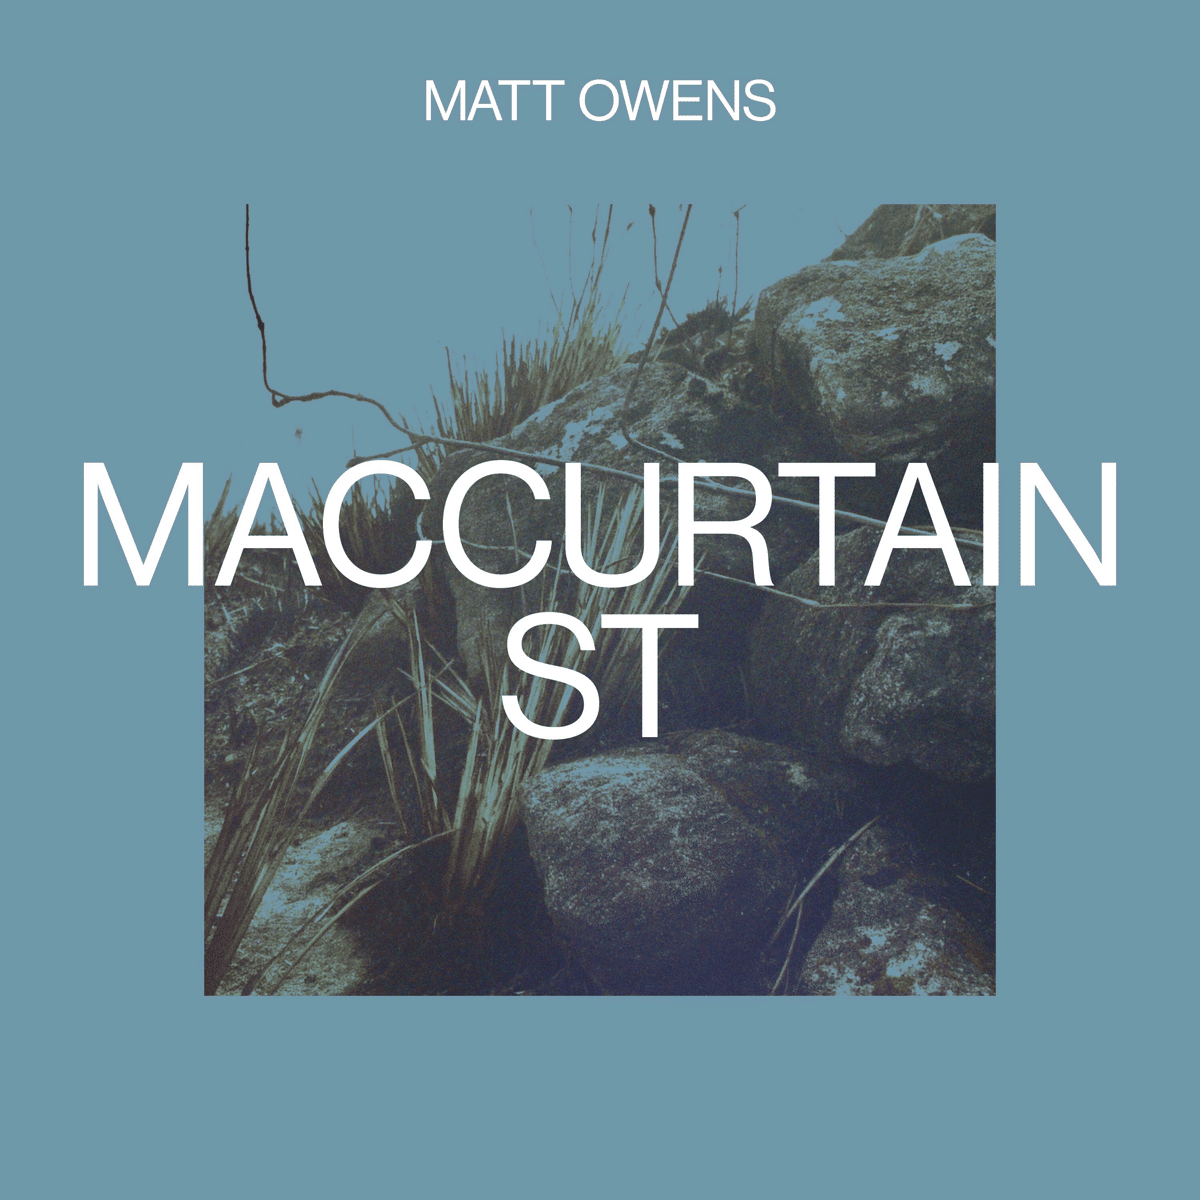 Artwork for Matt Owens song Maccurtain St S